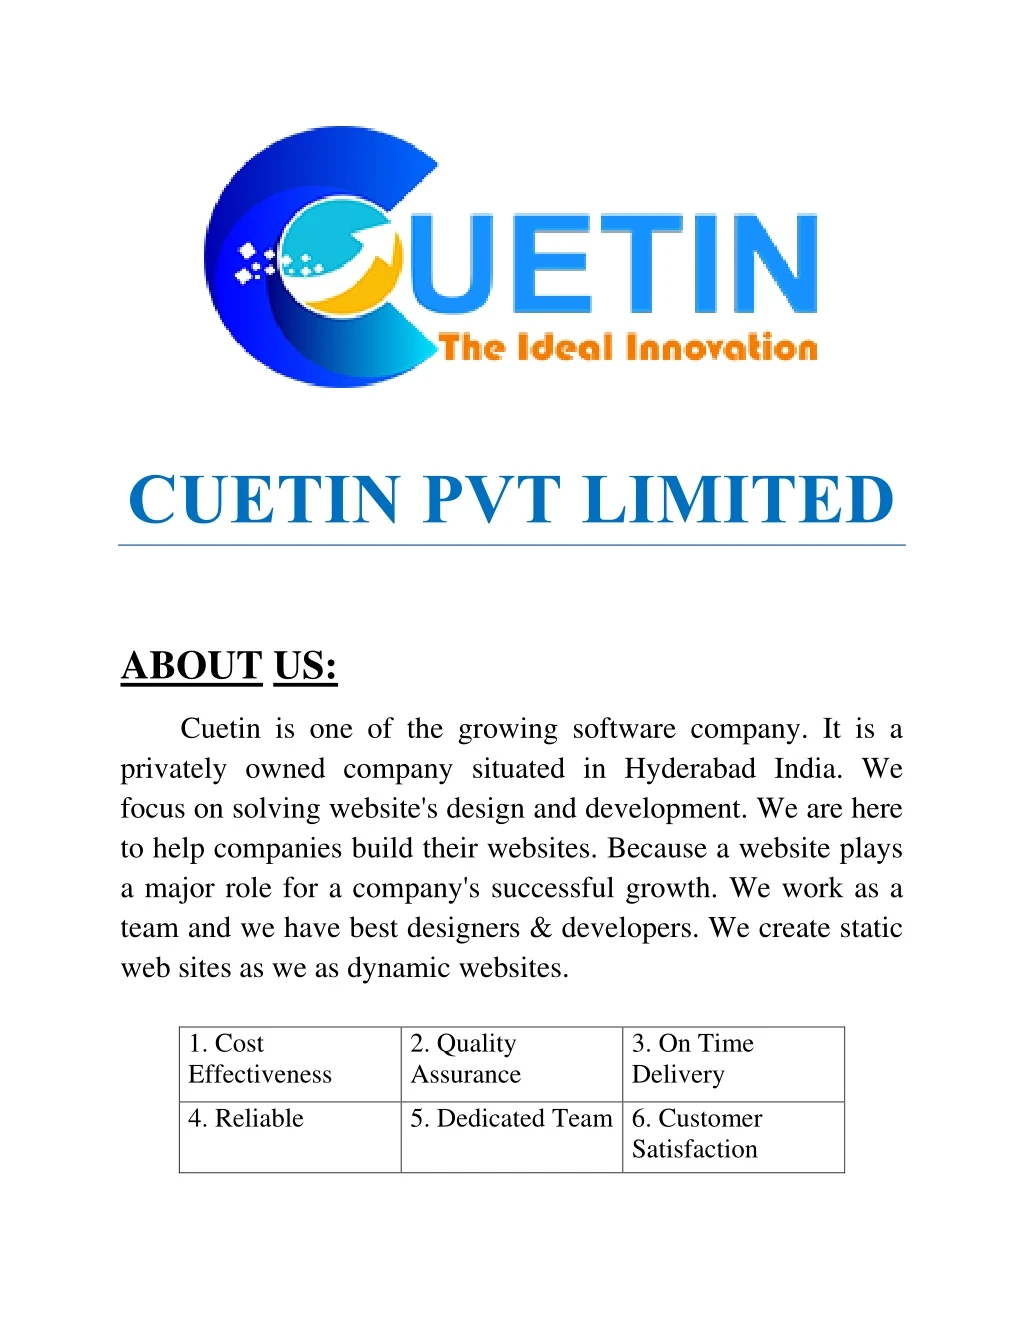 cuetin pvt limited